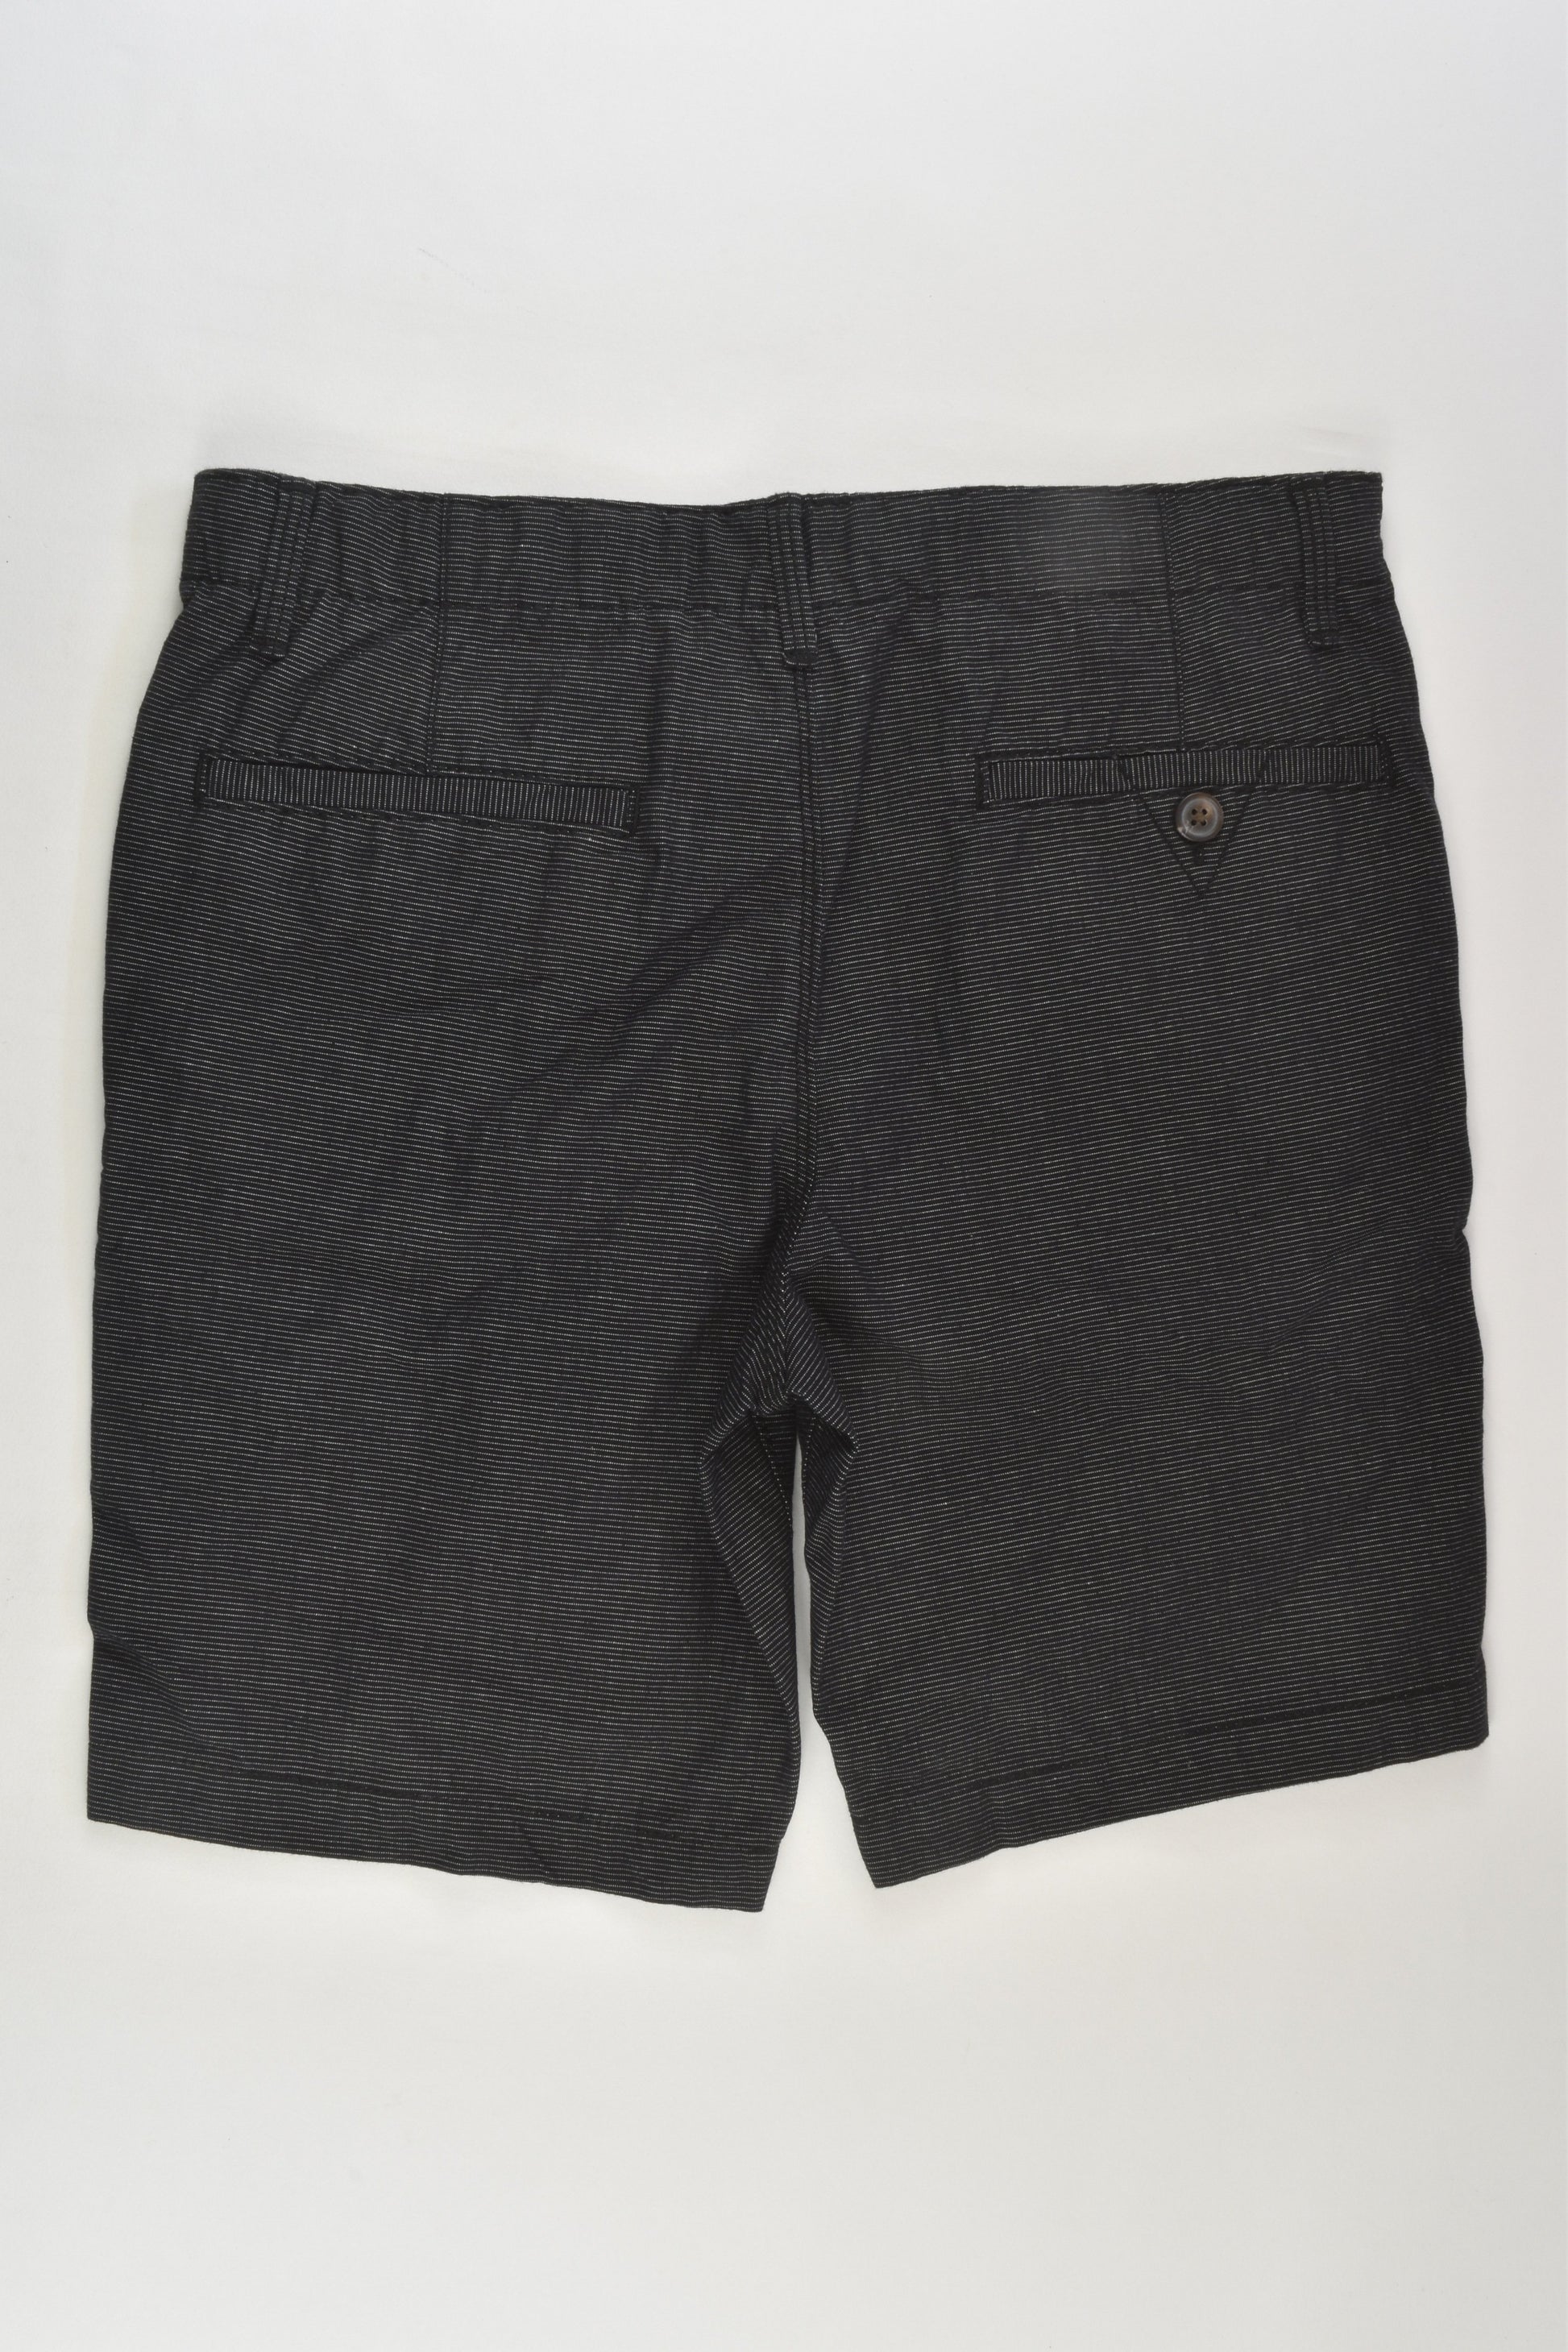 Target Size 12 Chino Shorts